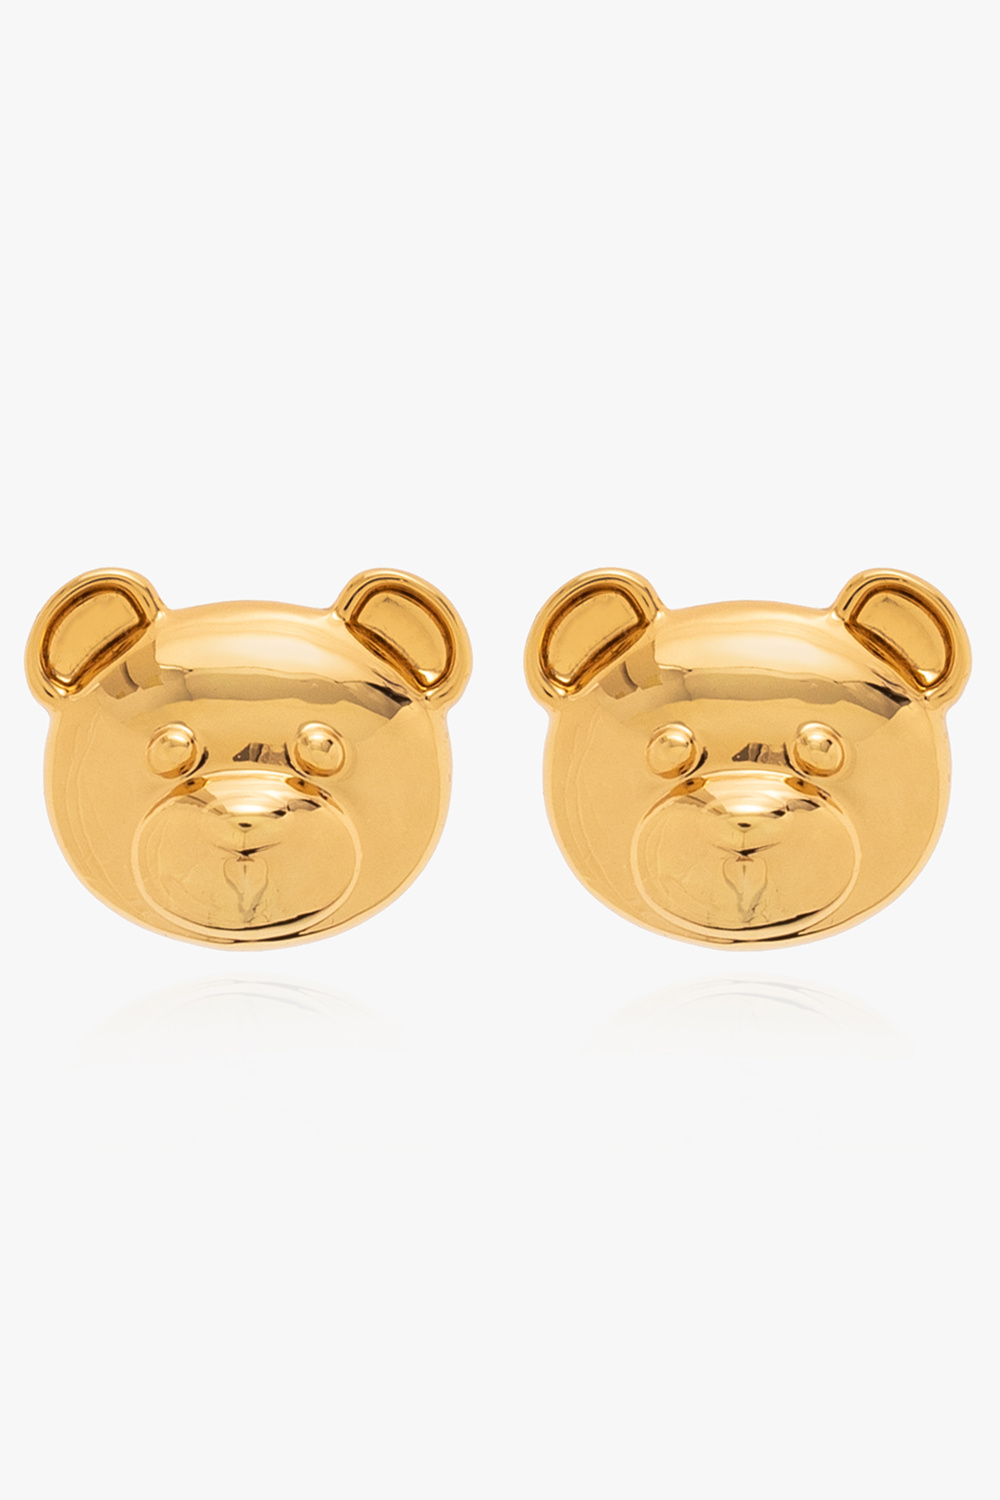 Moschino Clip-on earrings with teddy bear head